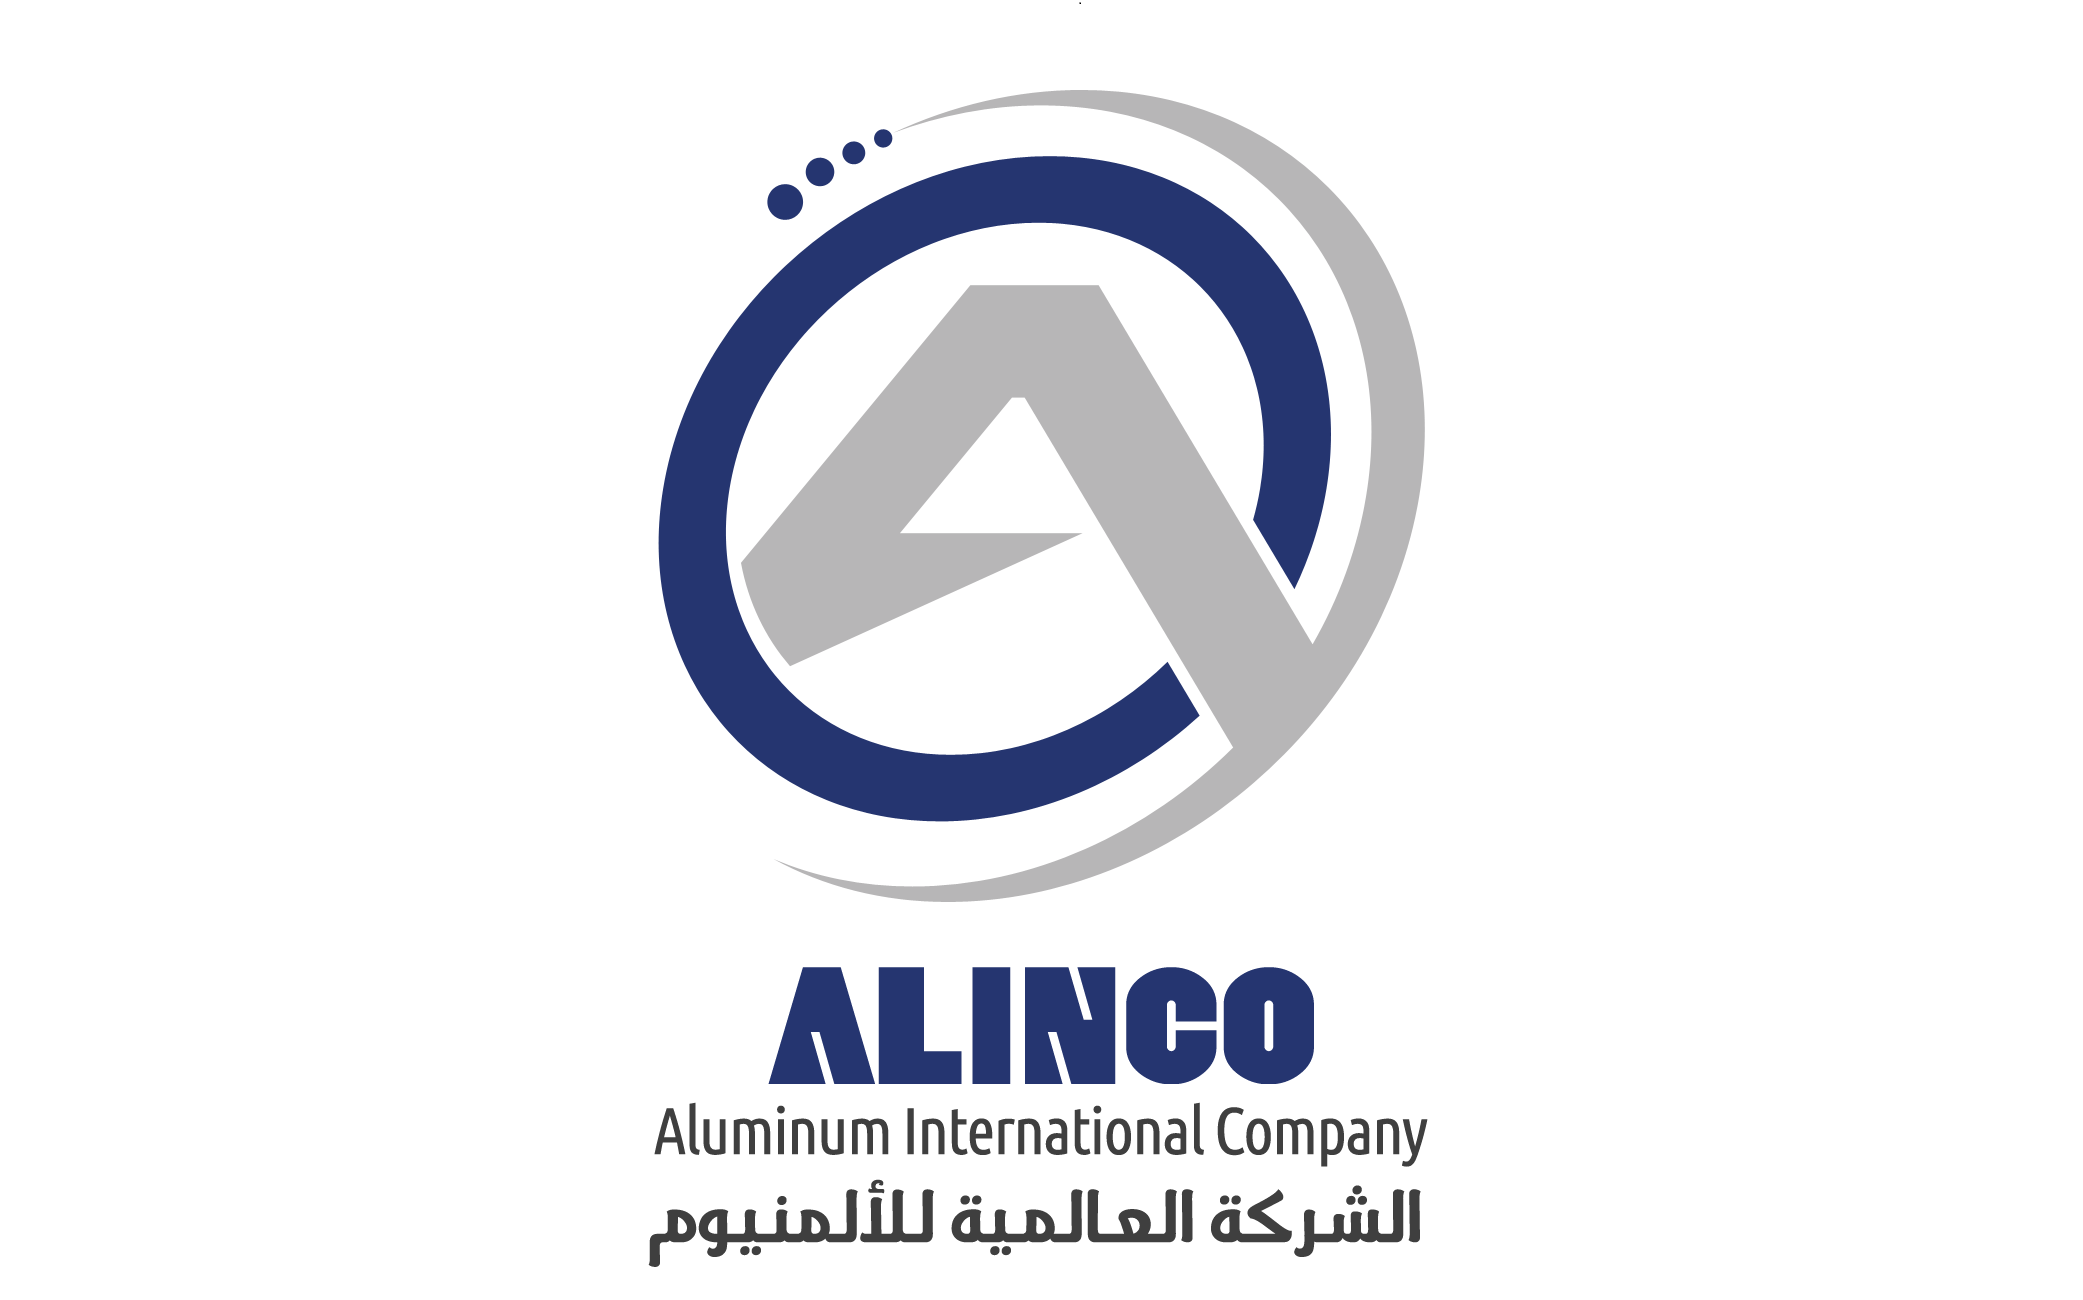 Aluminum Company Logo - Aluminum International Co. | Alinco